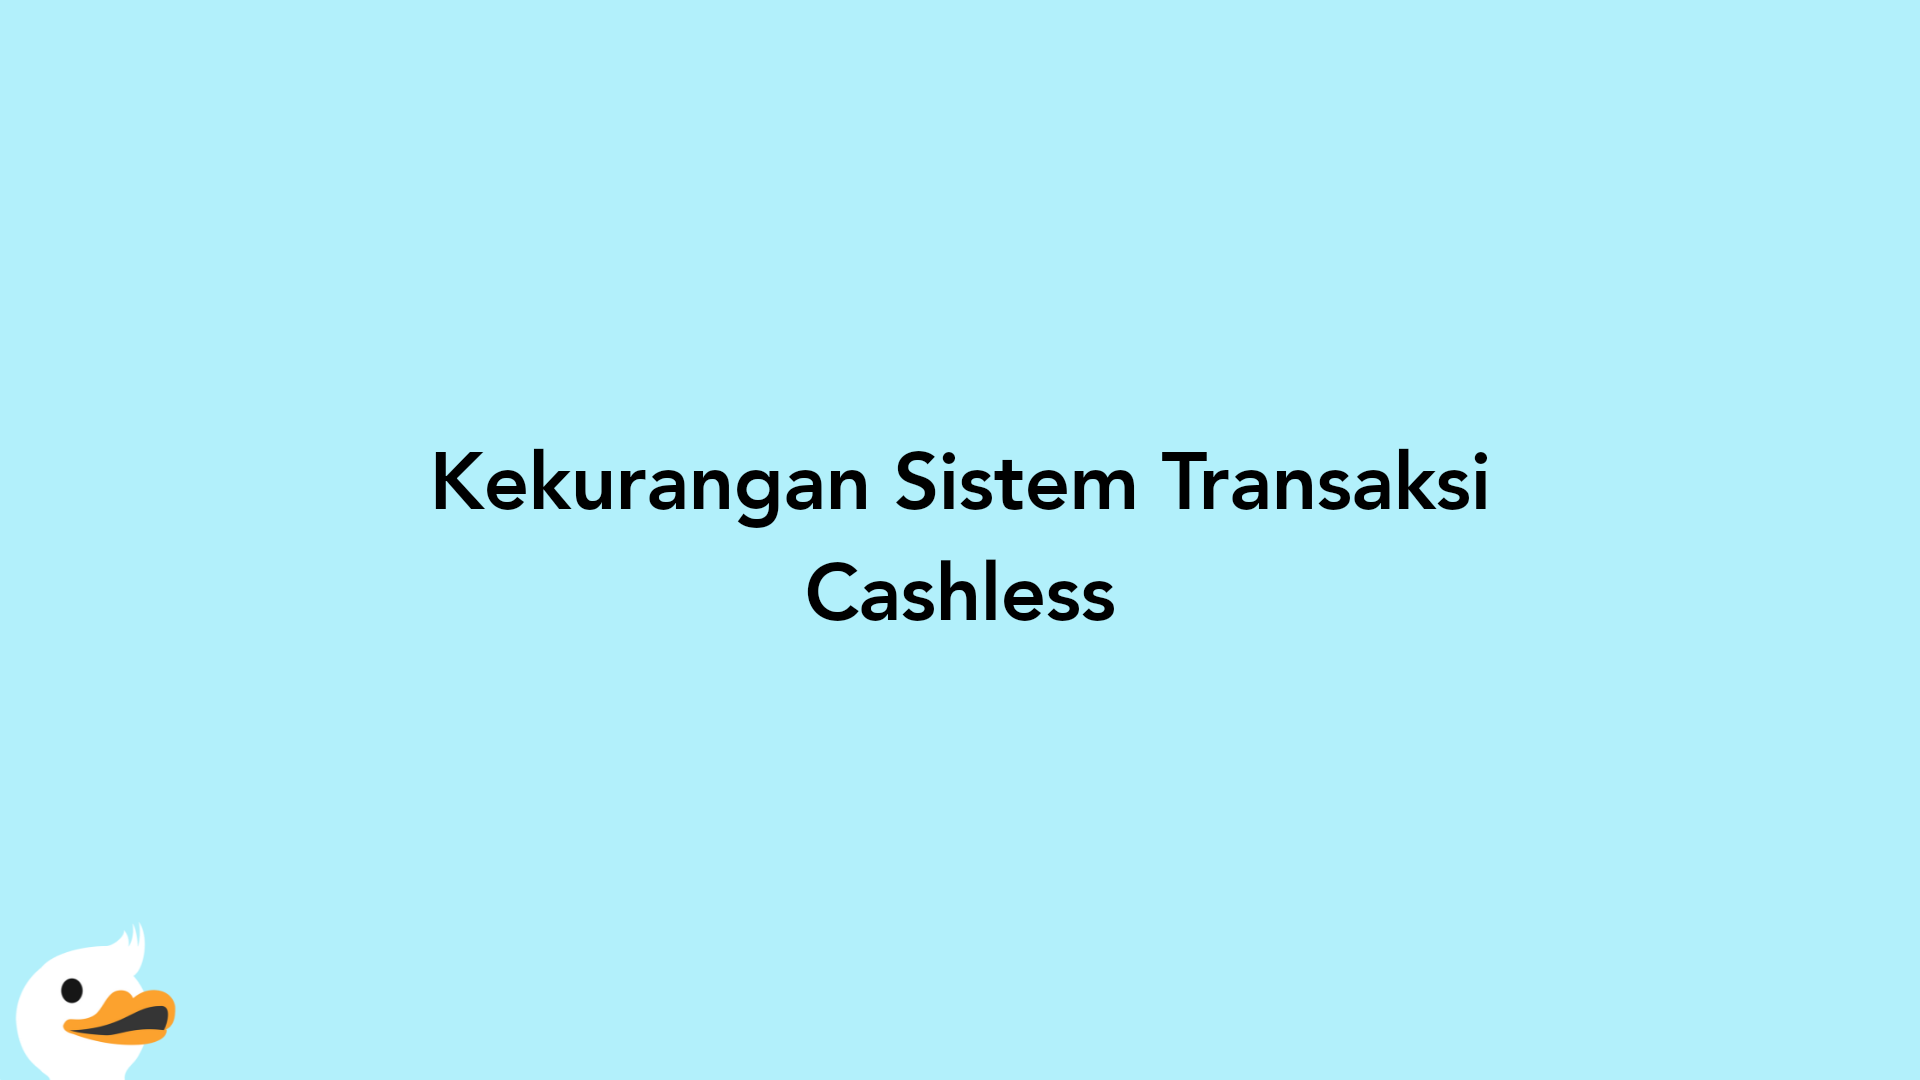 Kekurangan Sistem Transaksi Cashless